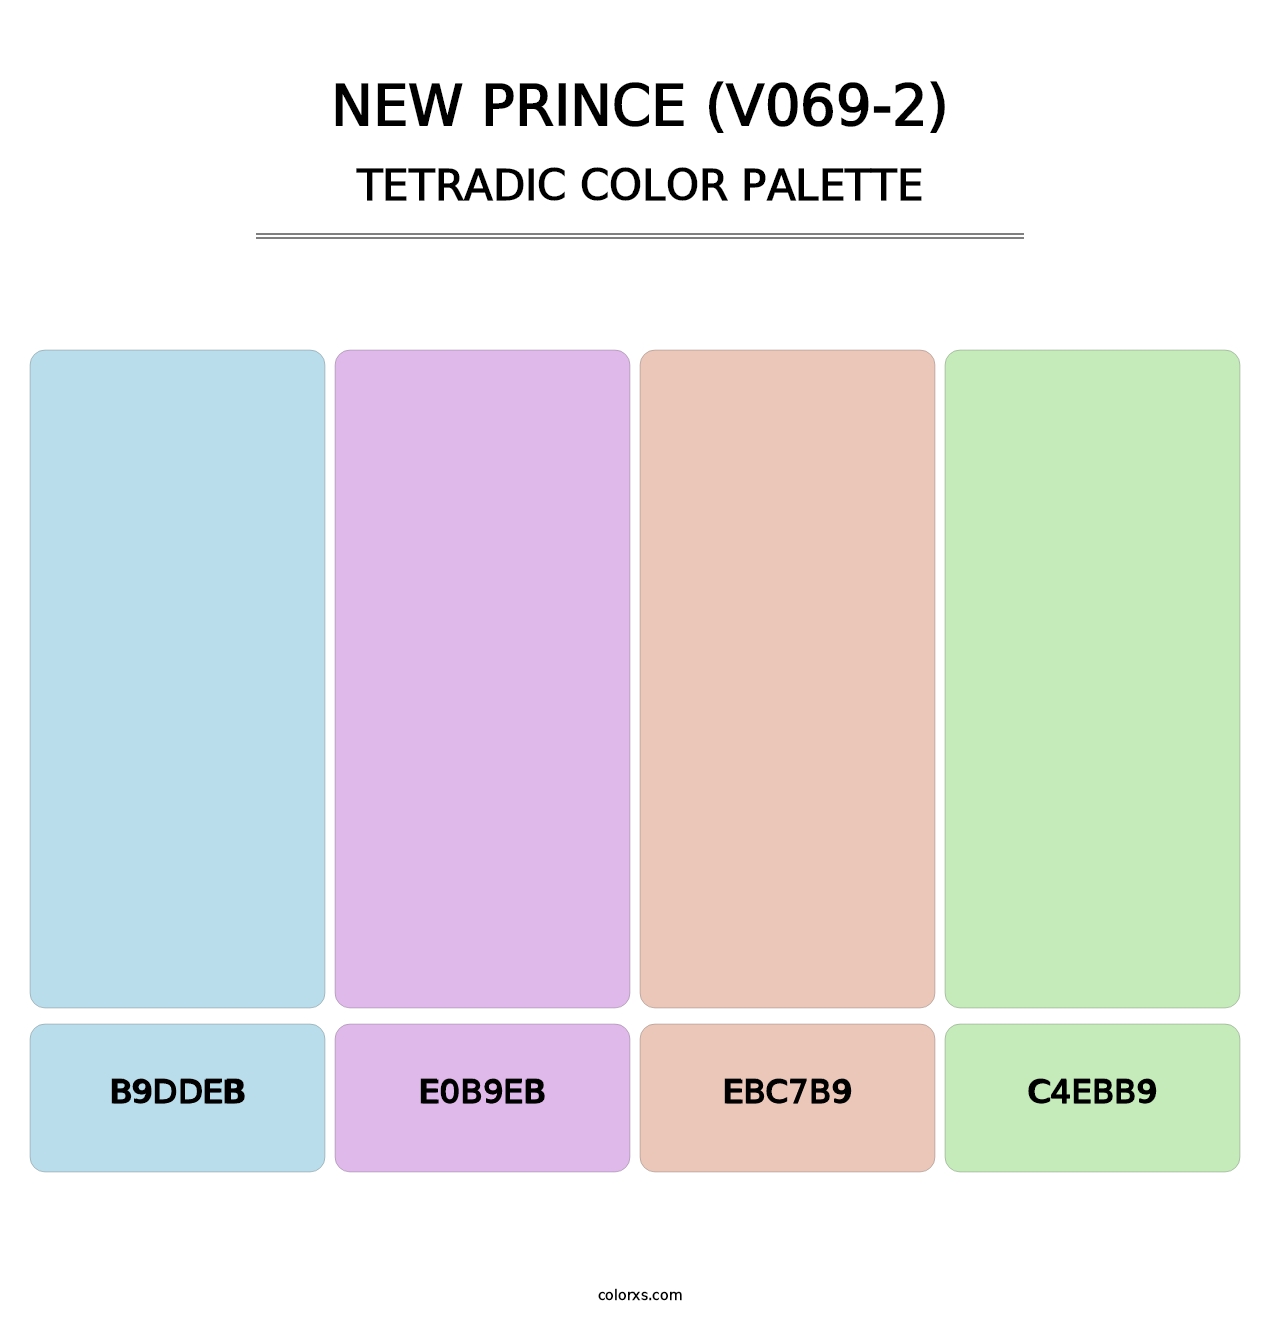 New Prince (V069-2) - Tetradic Color Palette